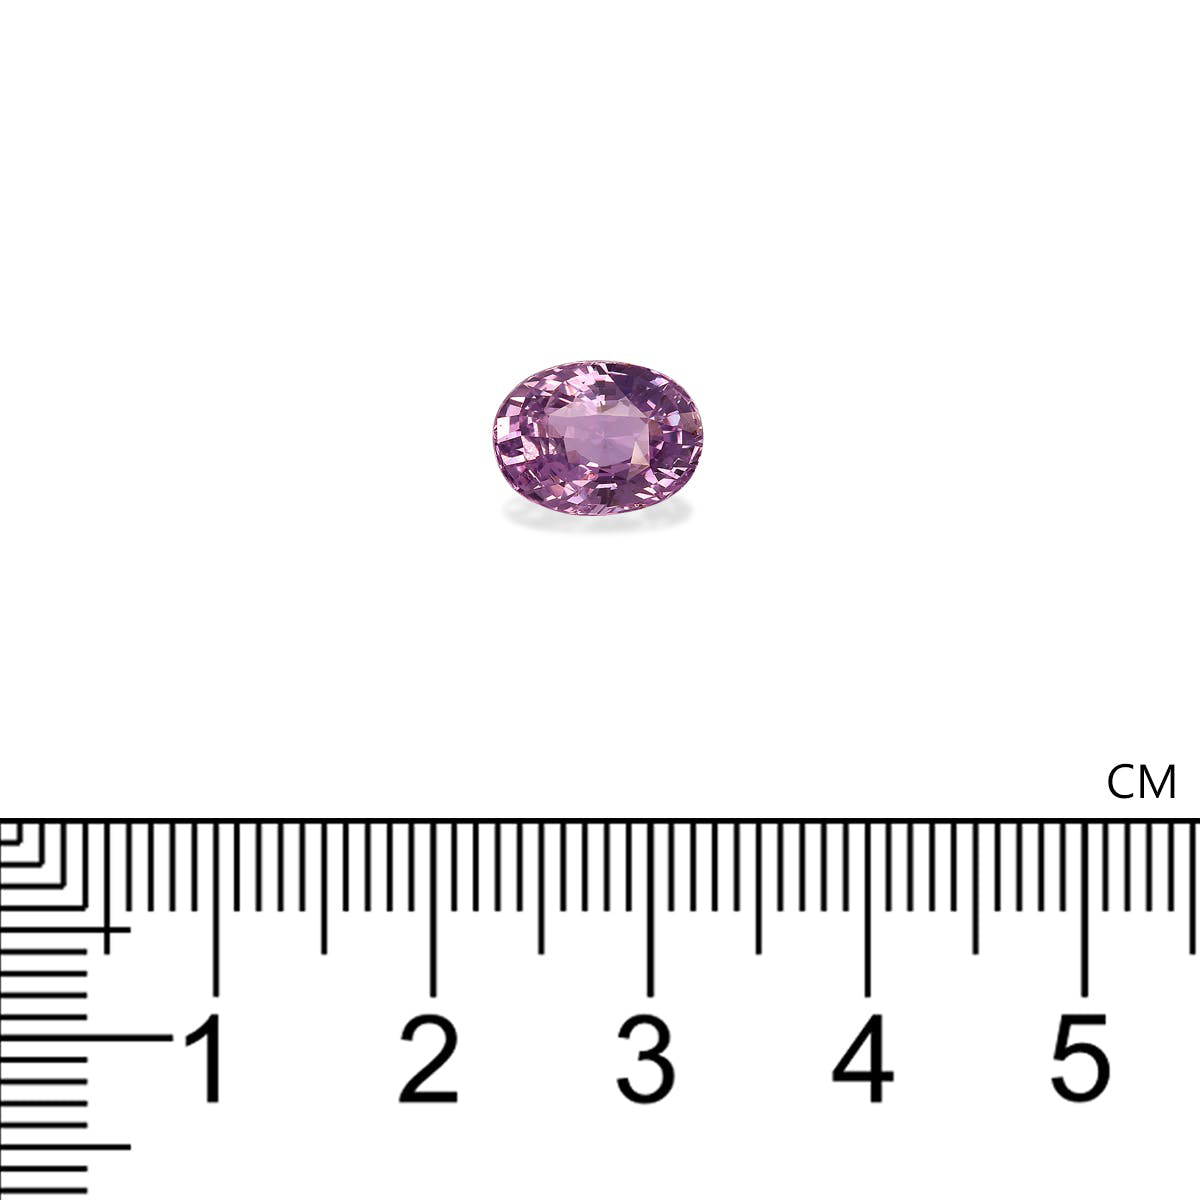 Picture of Purple Sapphire Unheated Sri Lanka 3.55ct (PS0025)